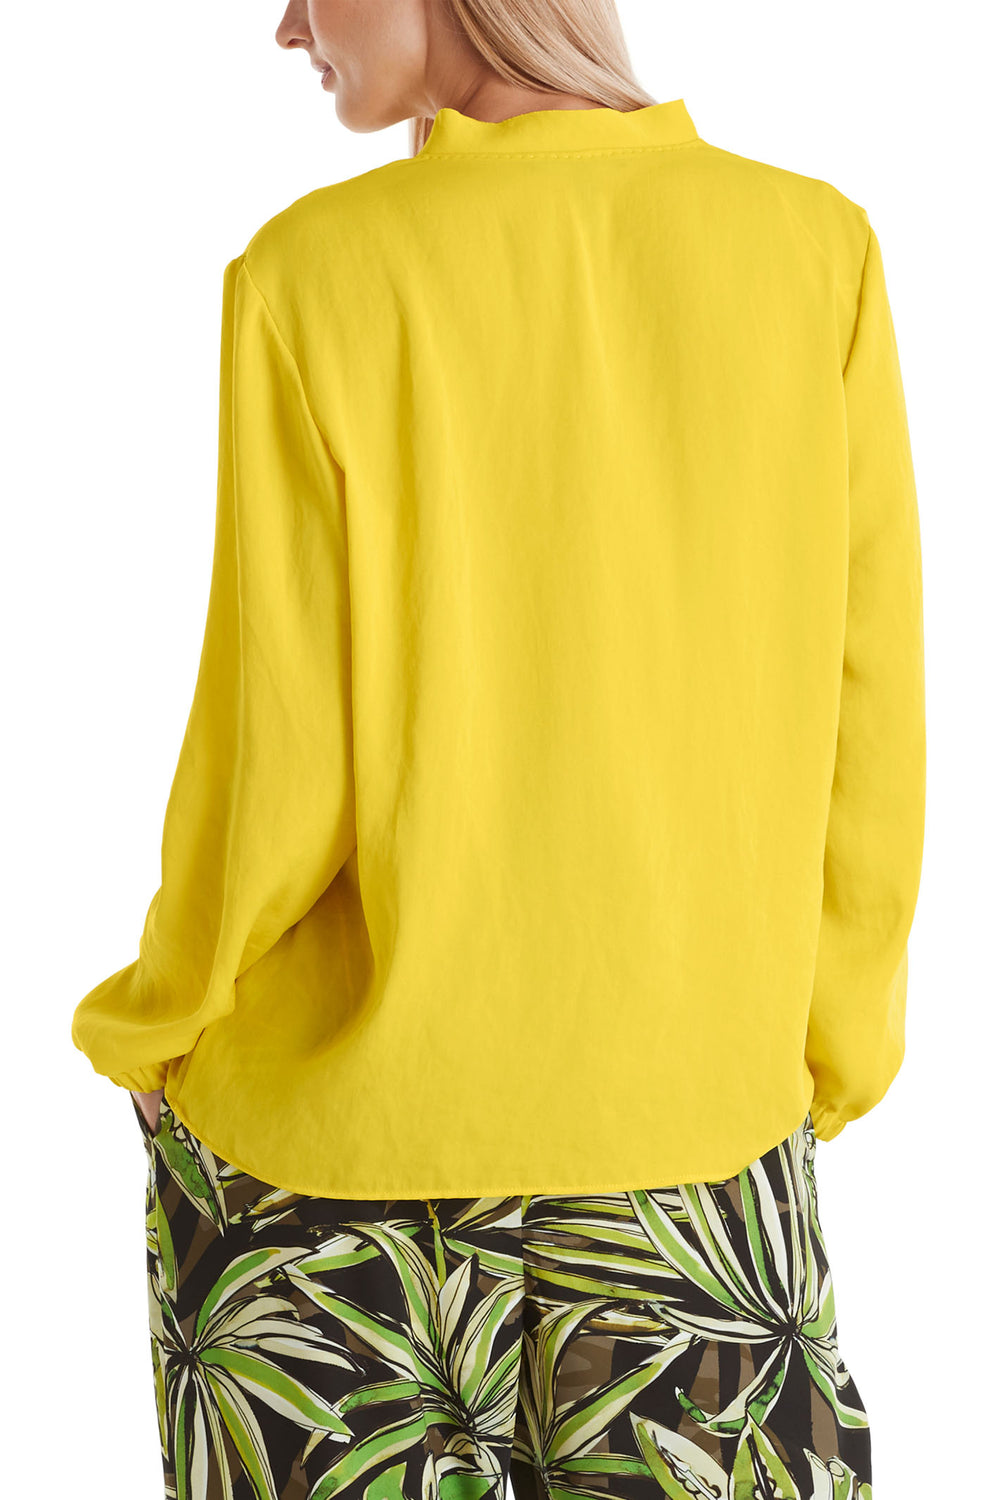 Marc Cain Additions WA 51.03 W39 431 Bright Sulphur Yellow Blouse - Olivia Grace Fashion